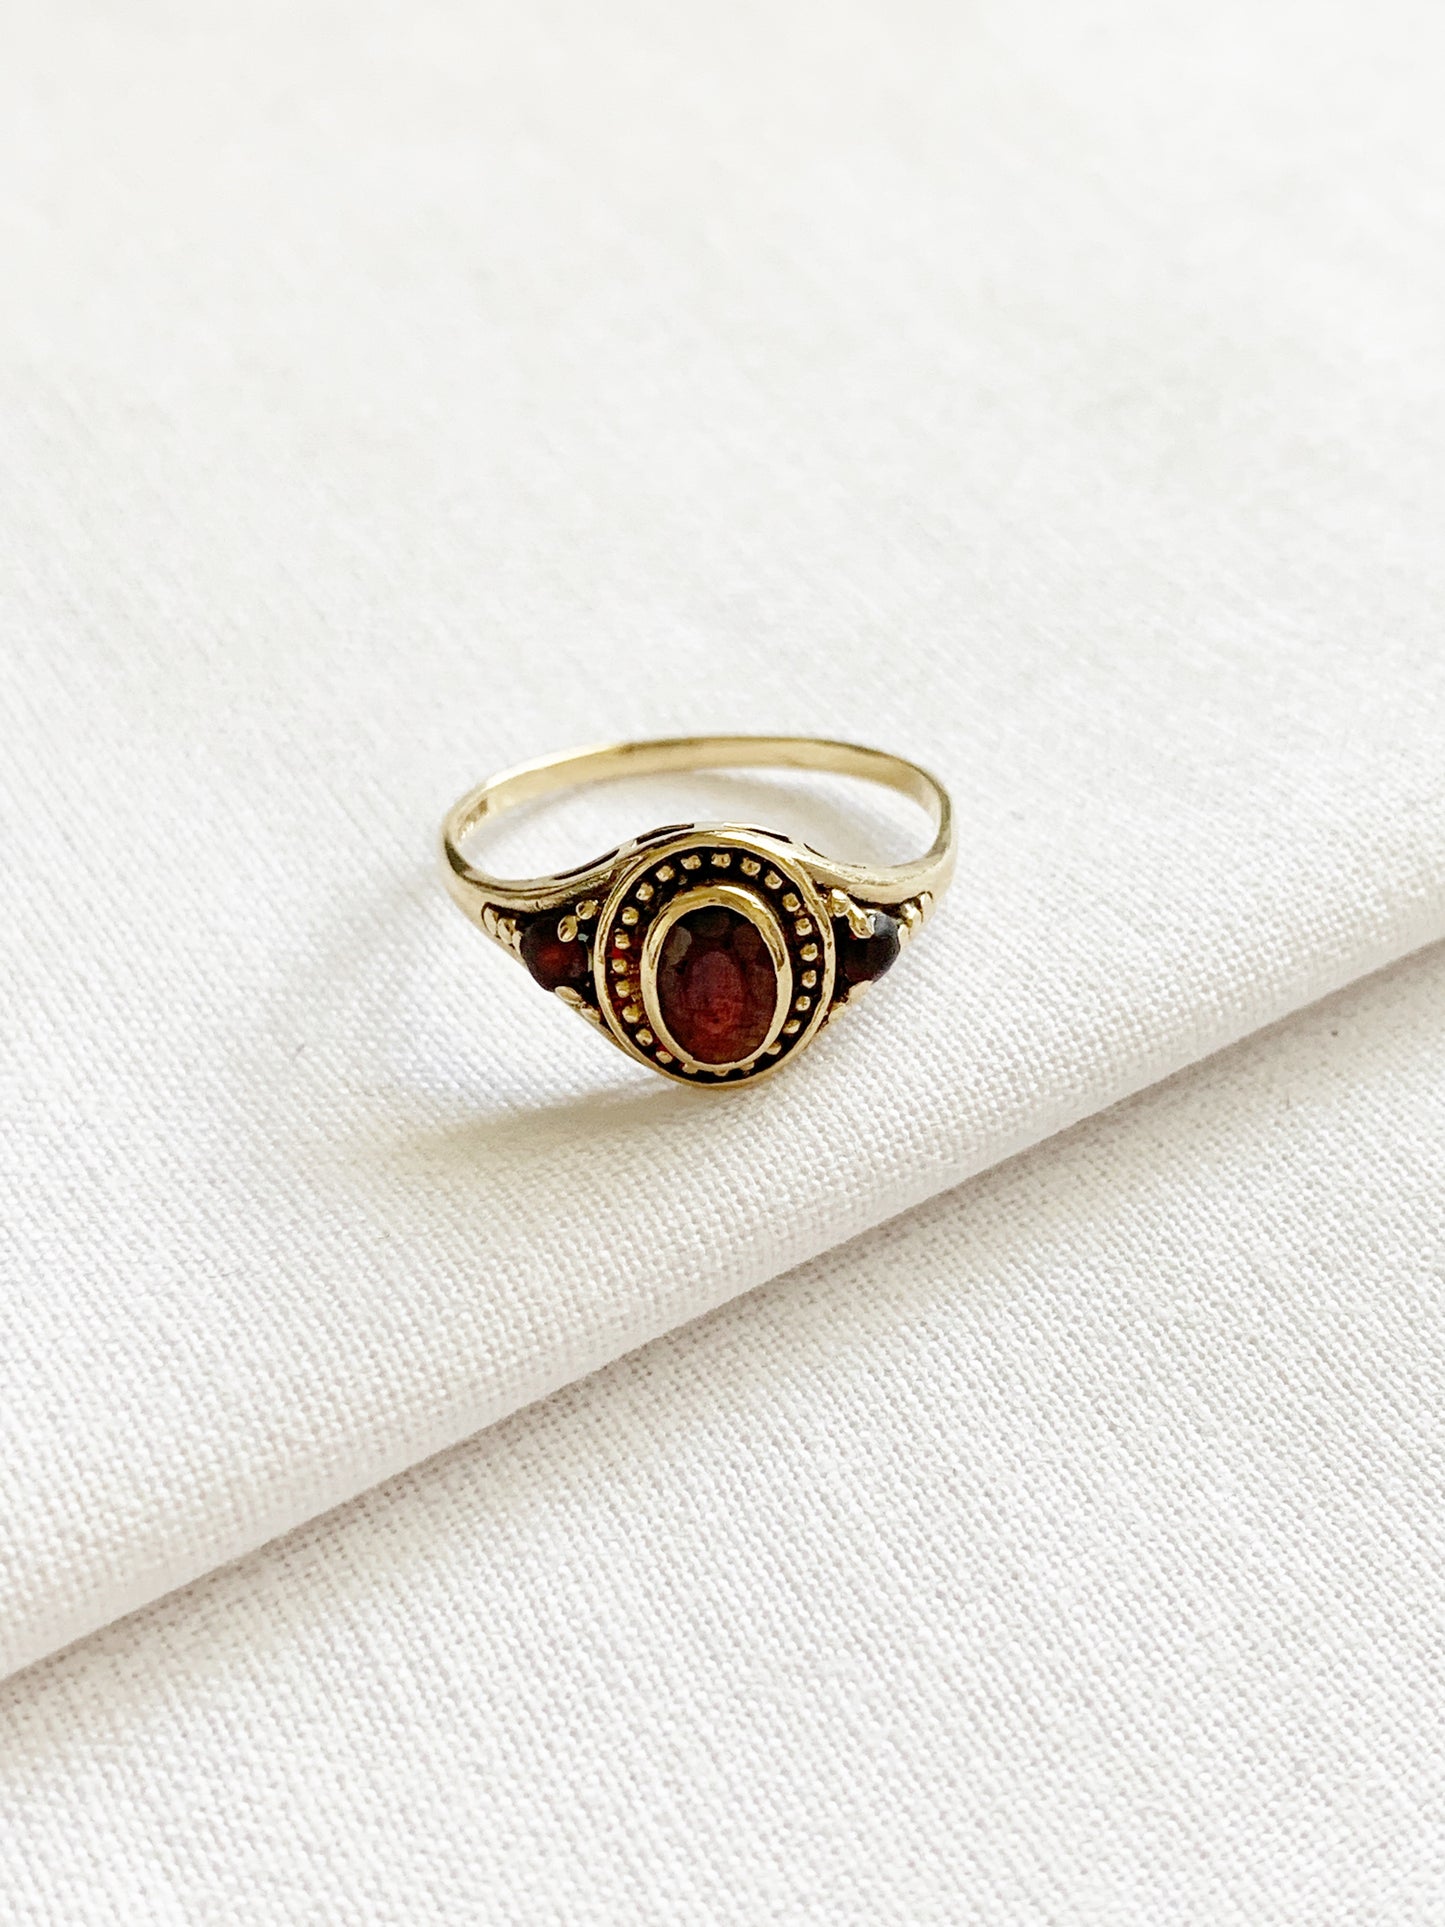 Vintage 9ct Gold Art Deco Style Garnet Ring